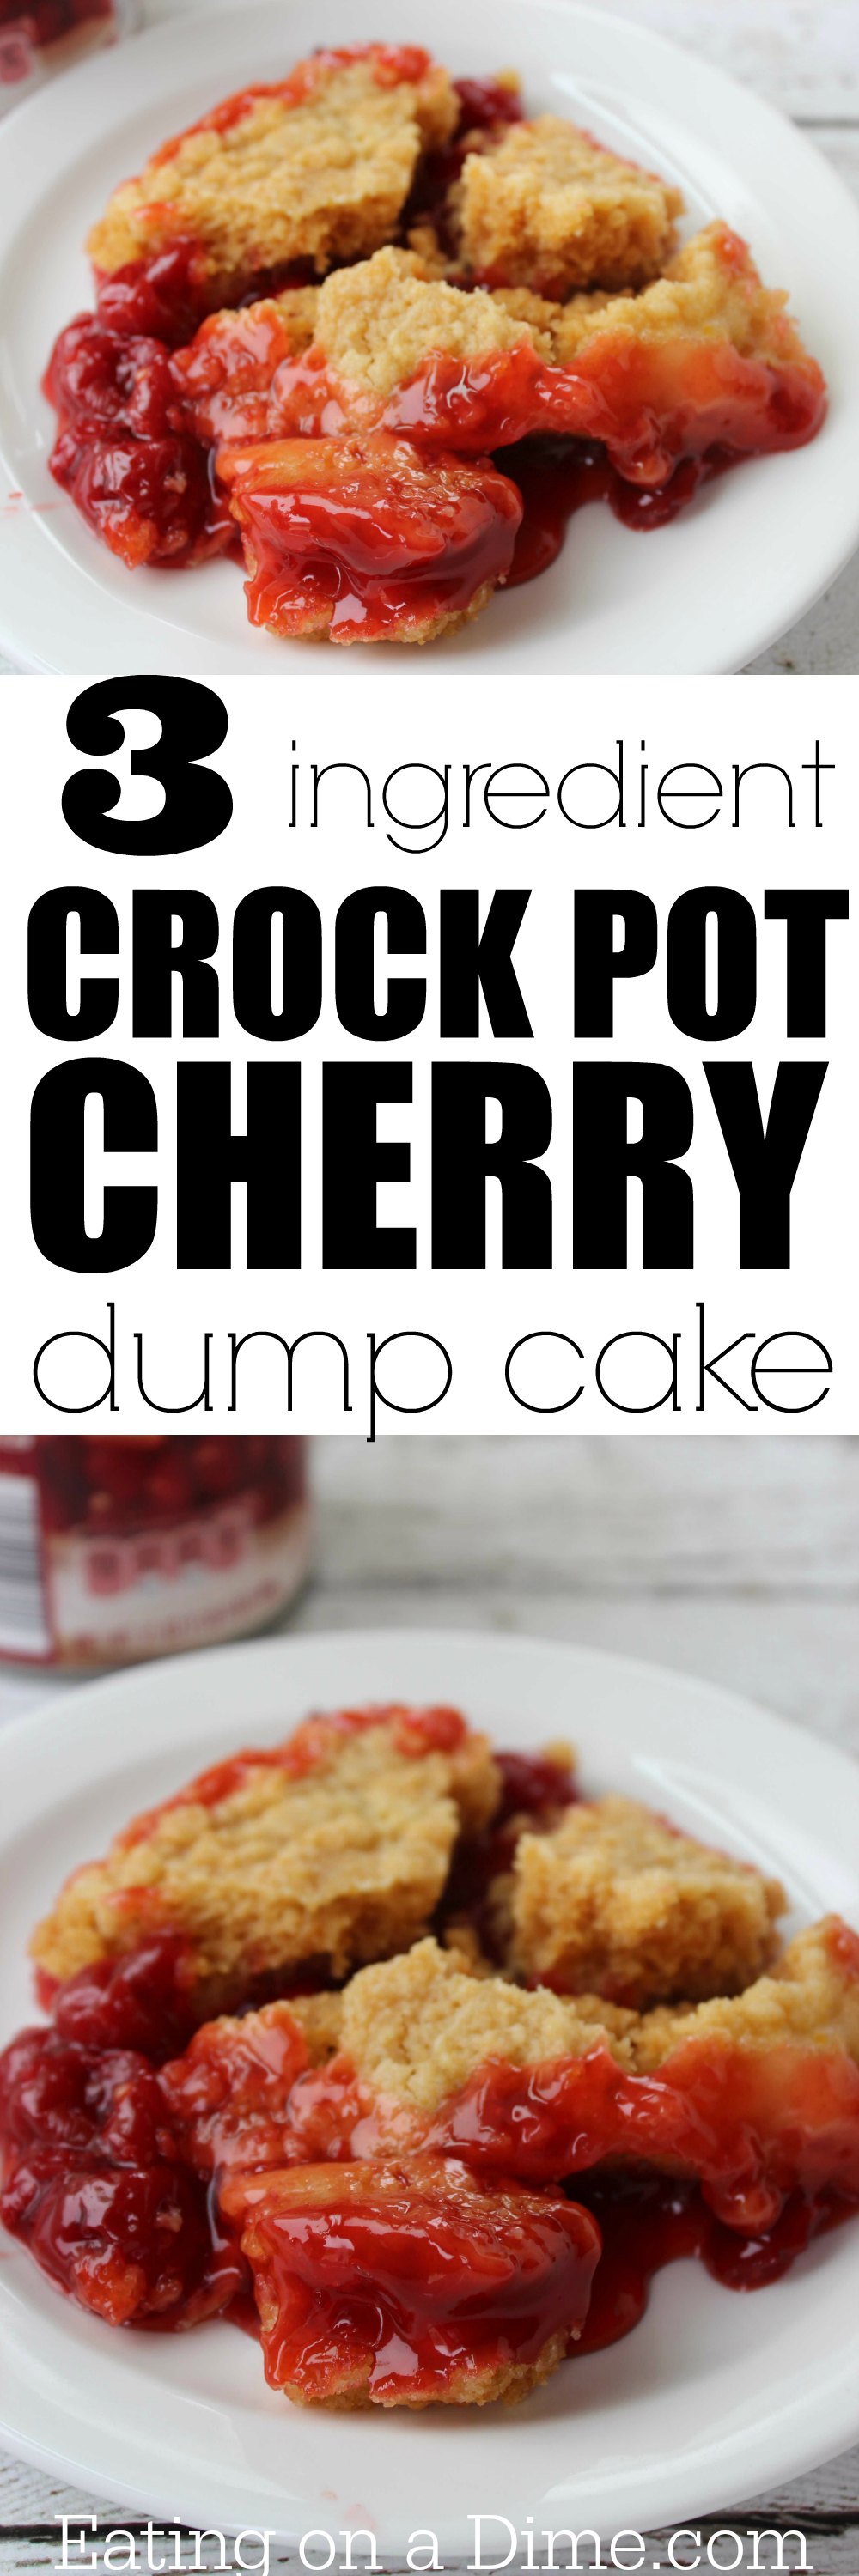 Crock pot Cherry Dump Cake - Eating on a Dime